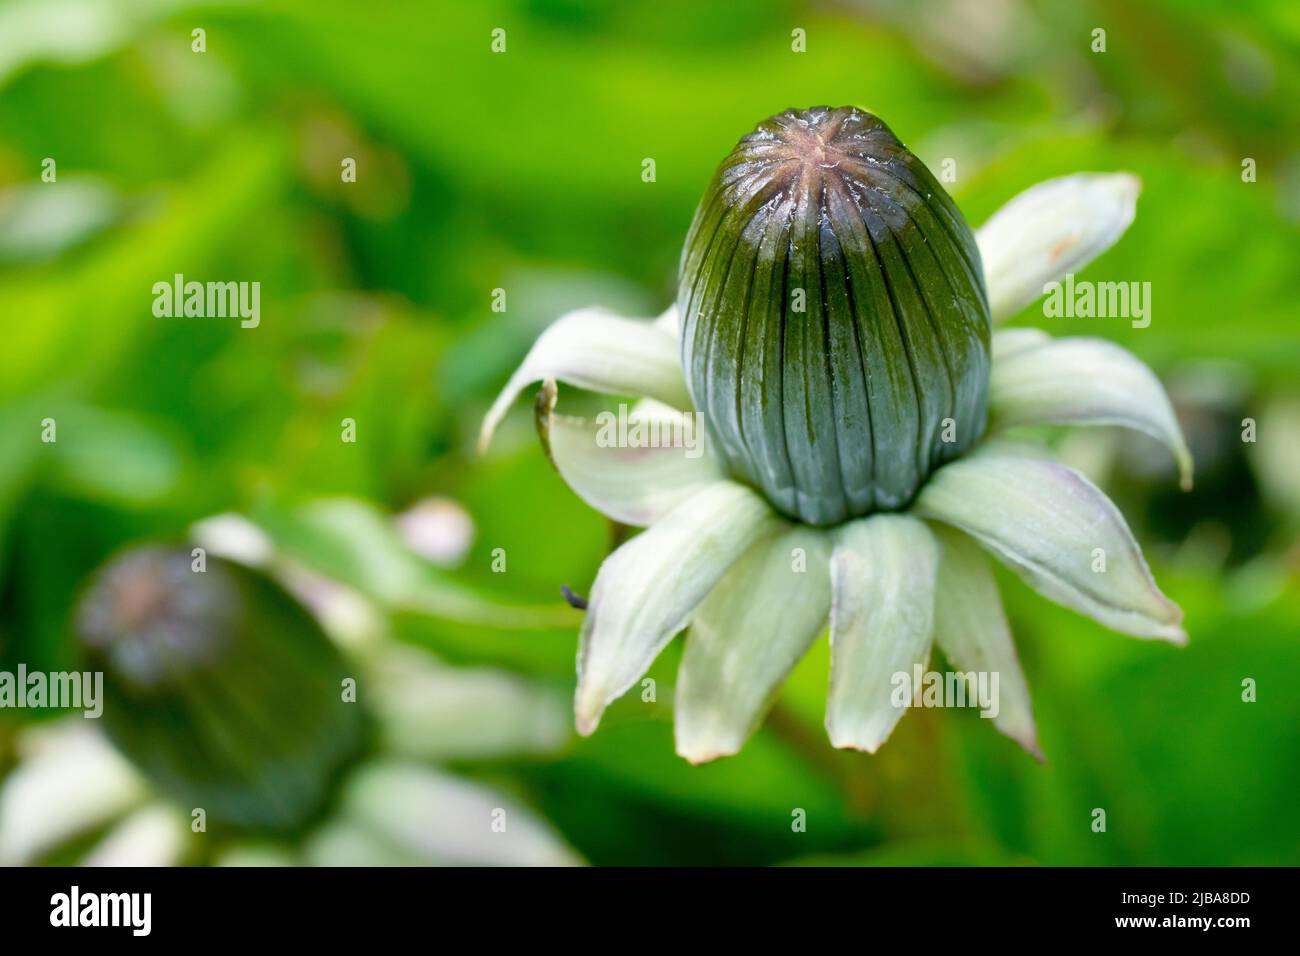 Dandelion (taraxacum officinalis), close up focusing on a single flower bud of the common wild flower. Stock Photo